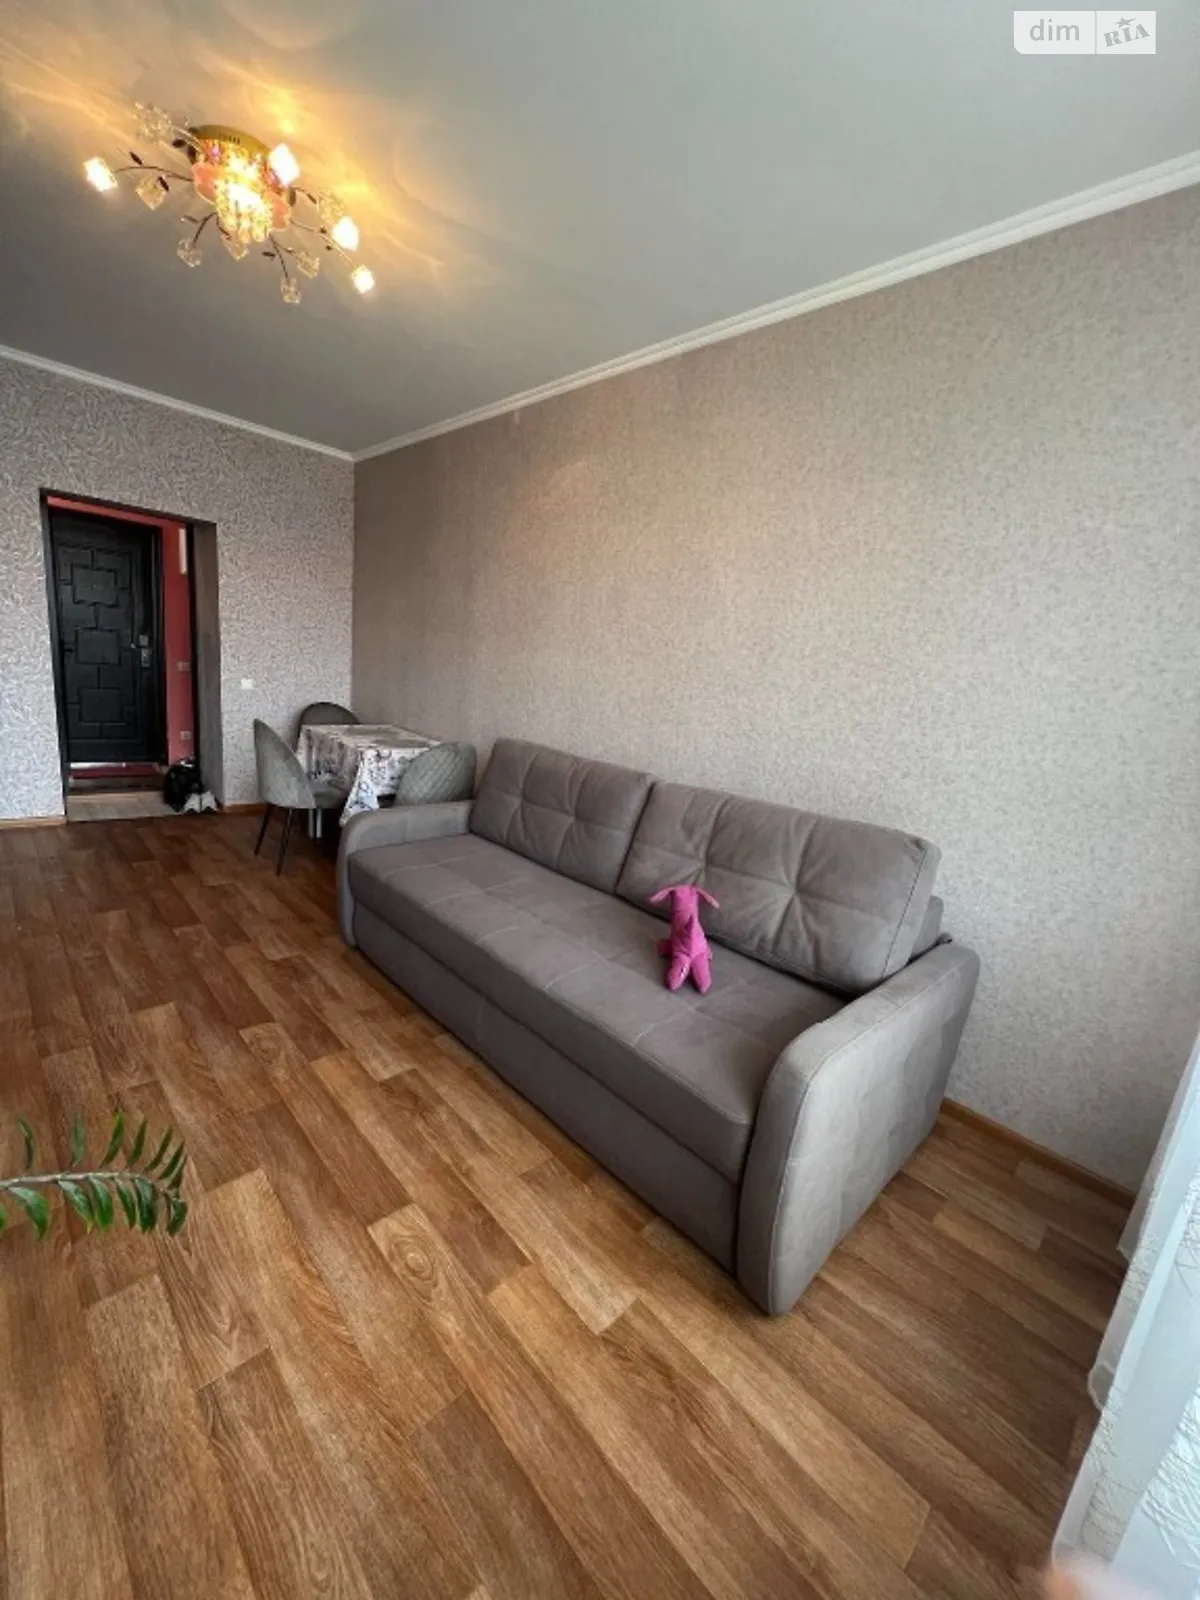 Продается комната 29.8 кв. м в Ровно - фото 2